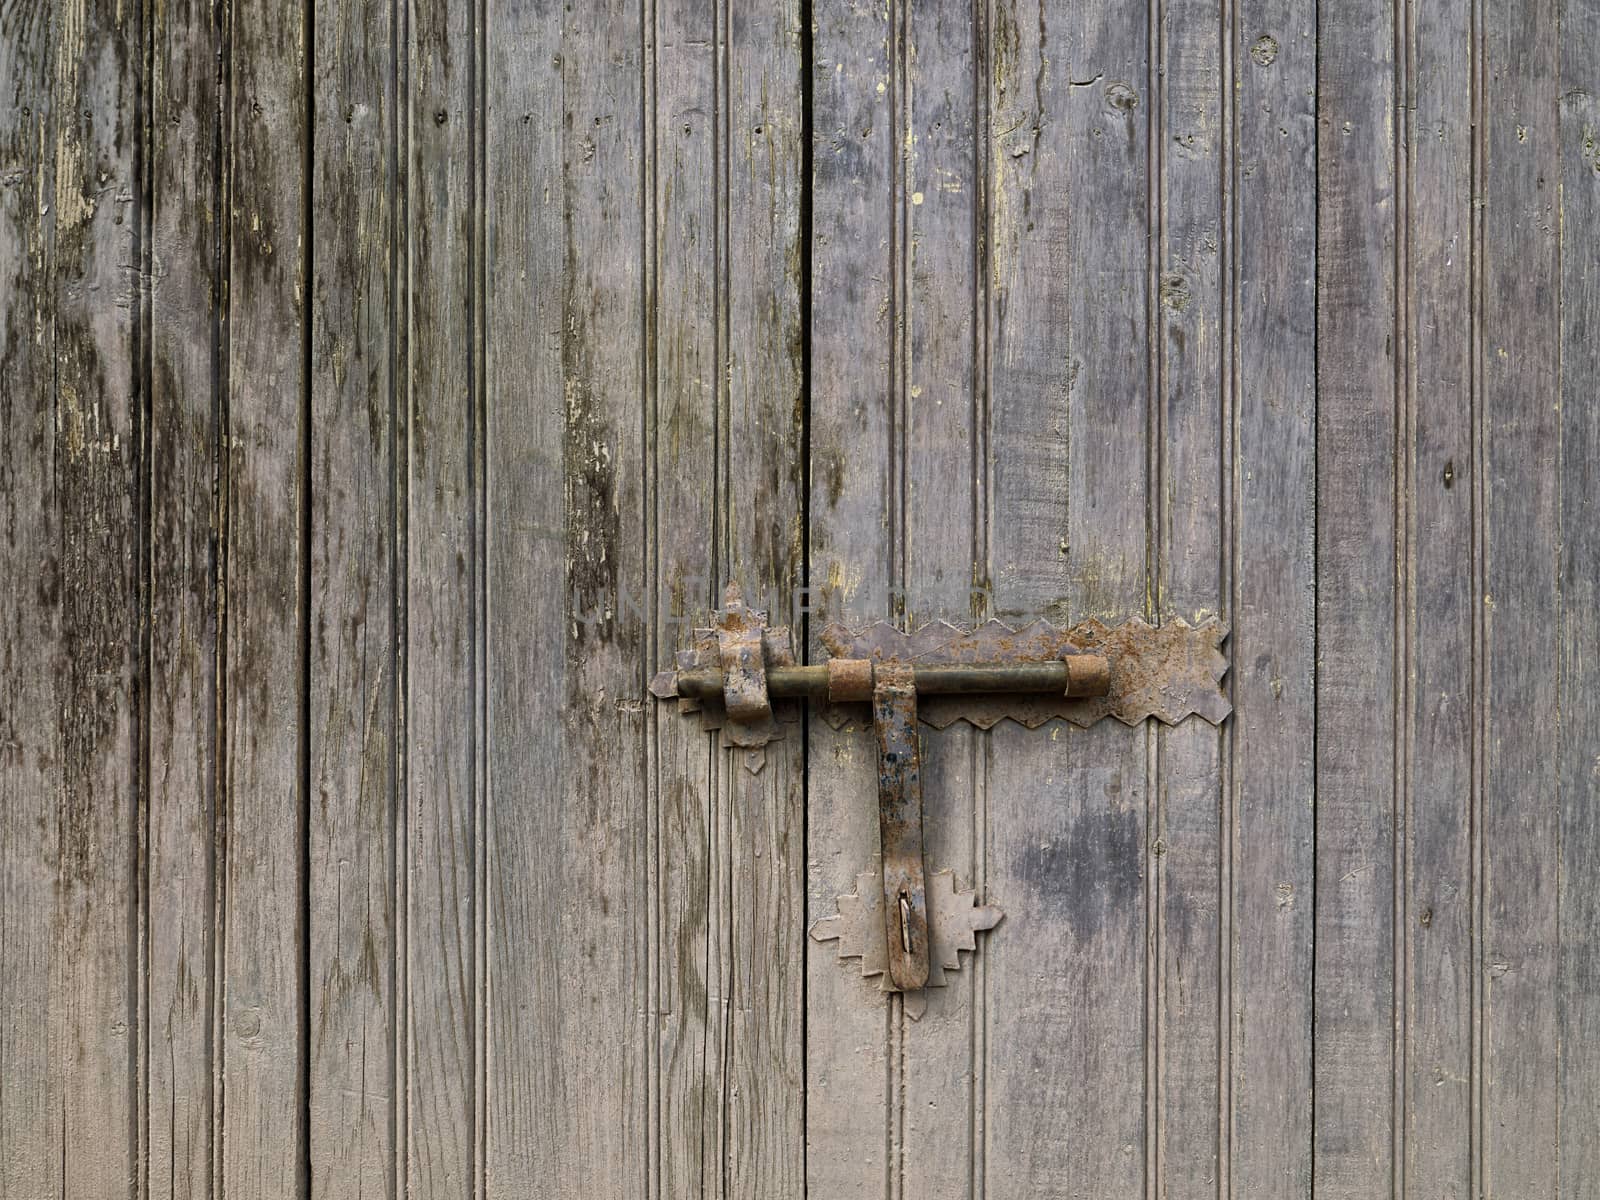 Old door lock and rusty latch
